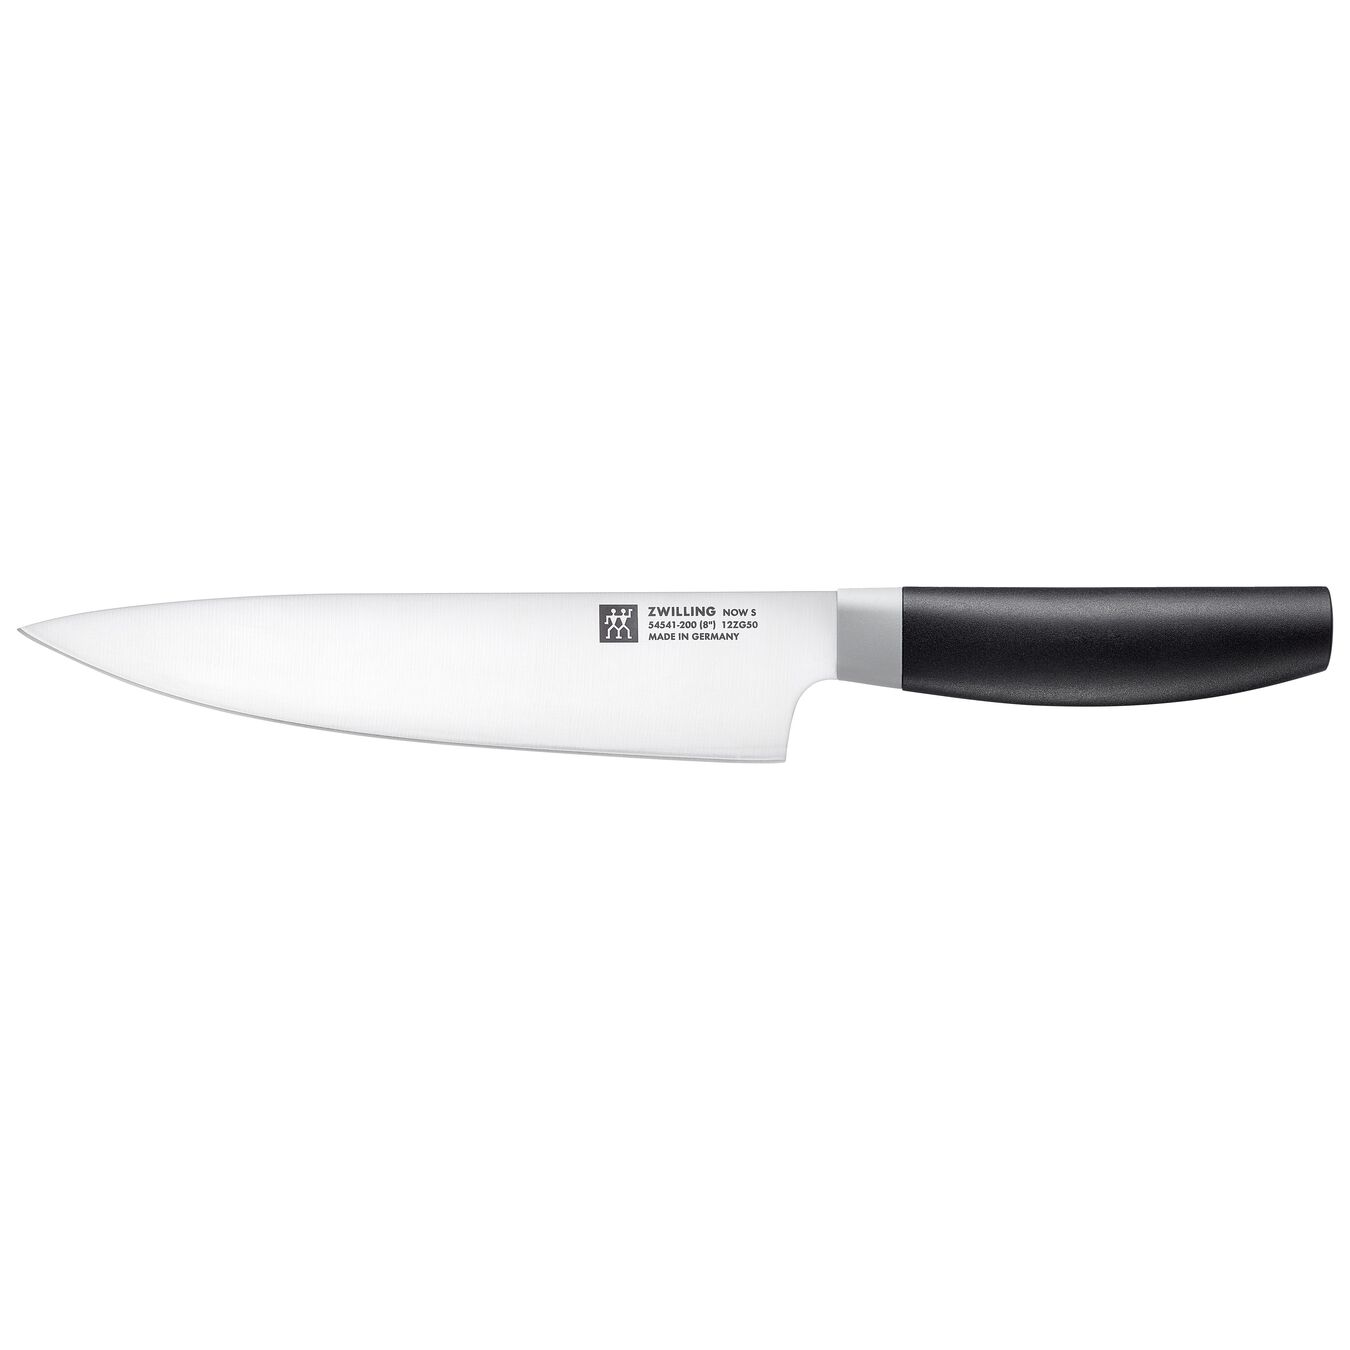 Нож поварской Zwilling Now s 200 мм кухонный нож zwilling now s 54541 201